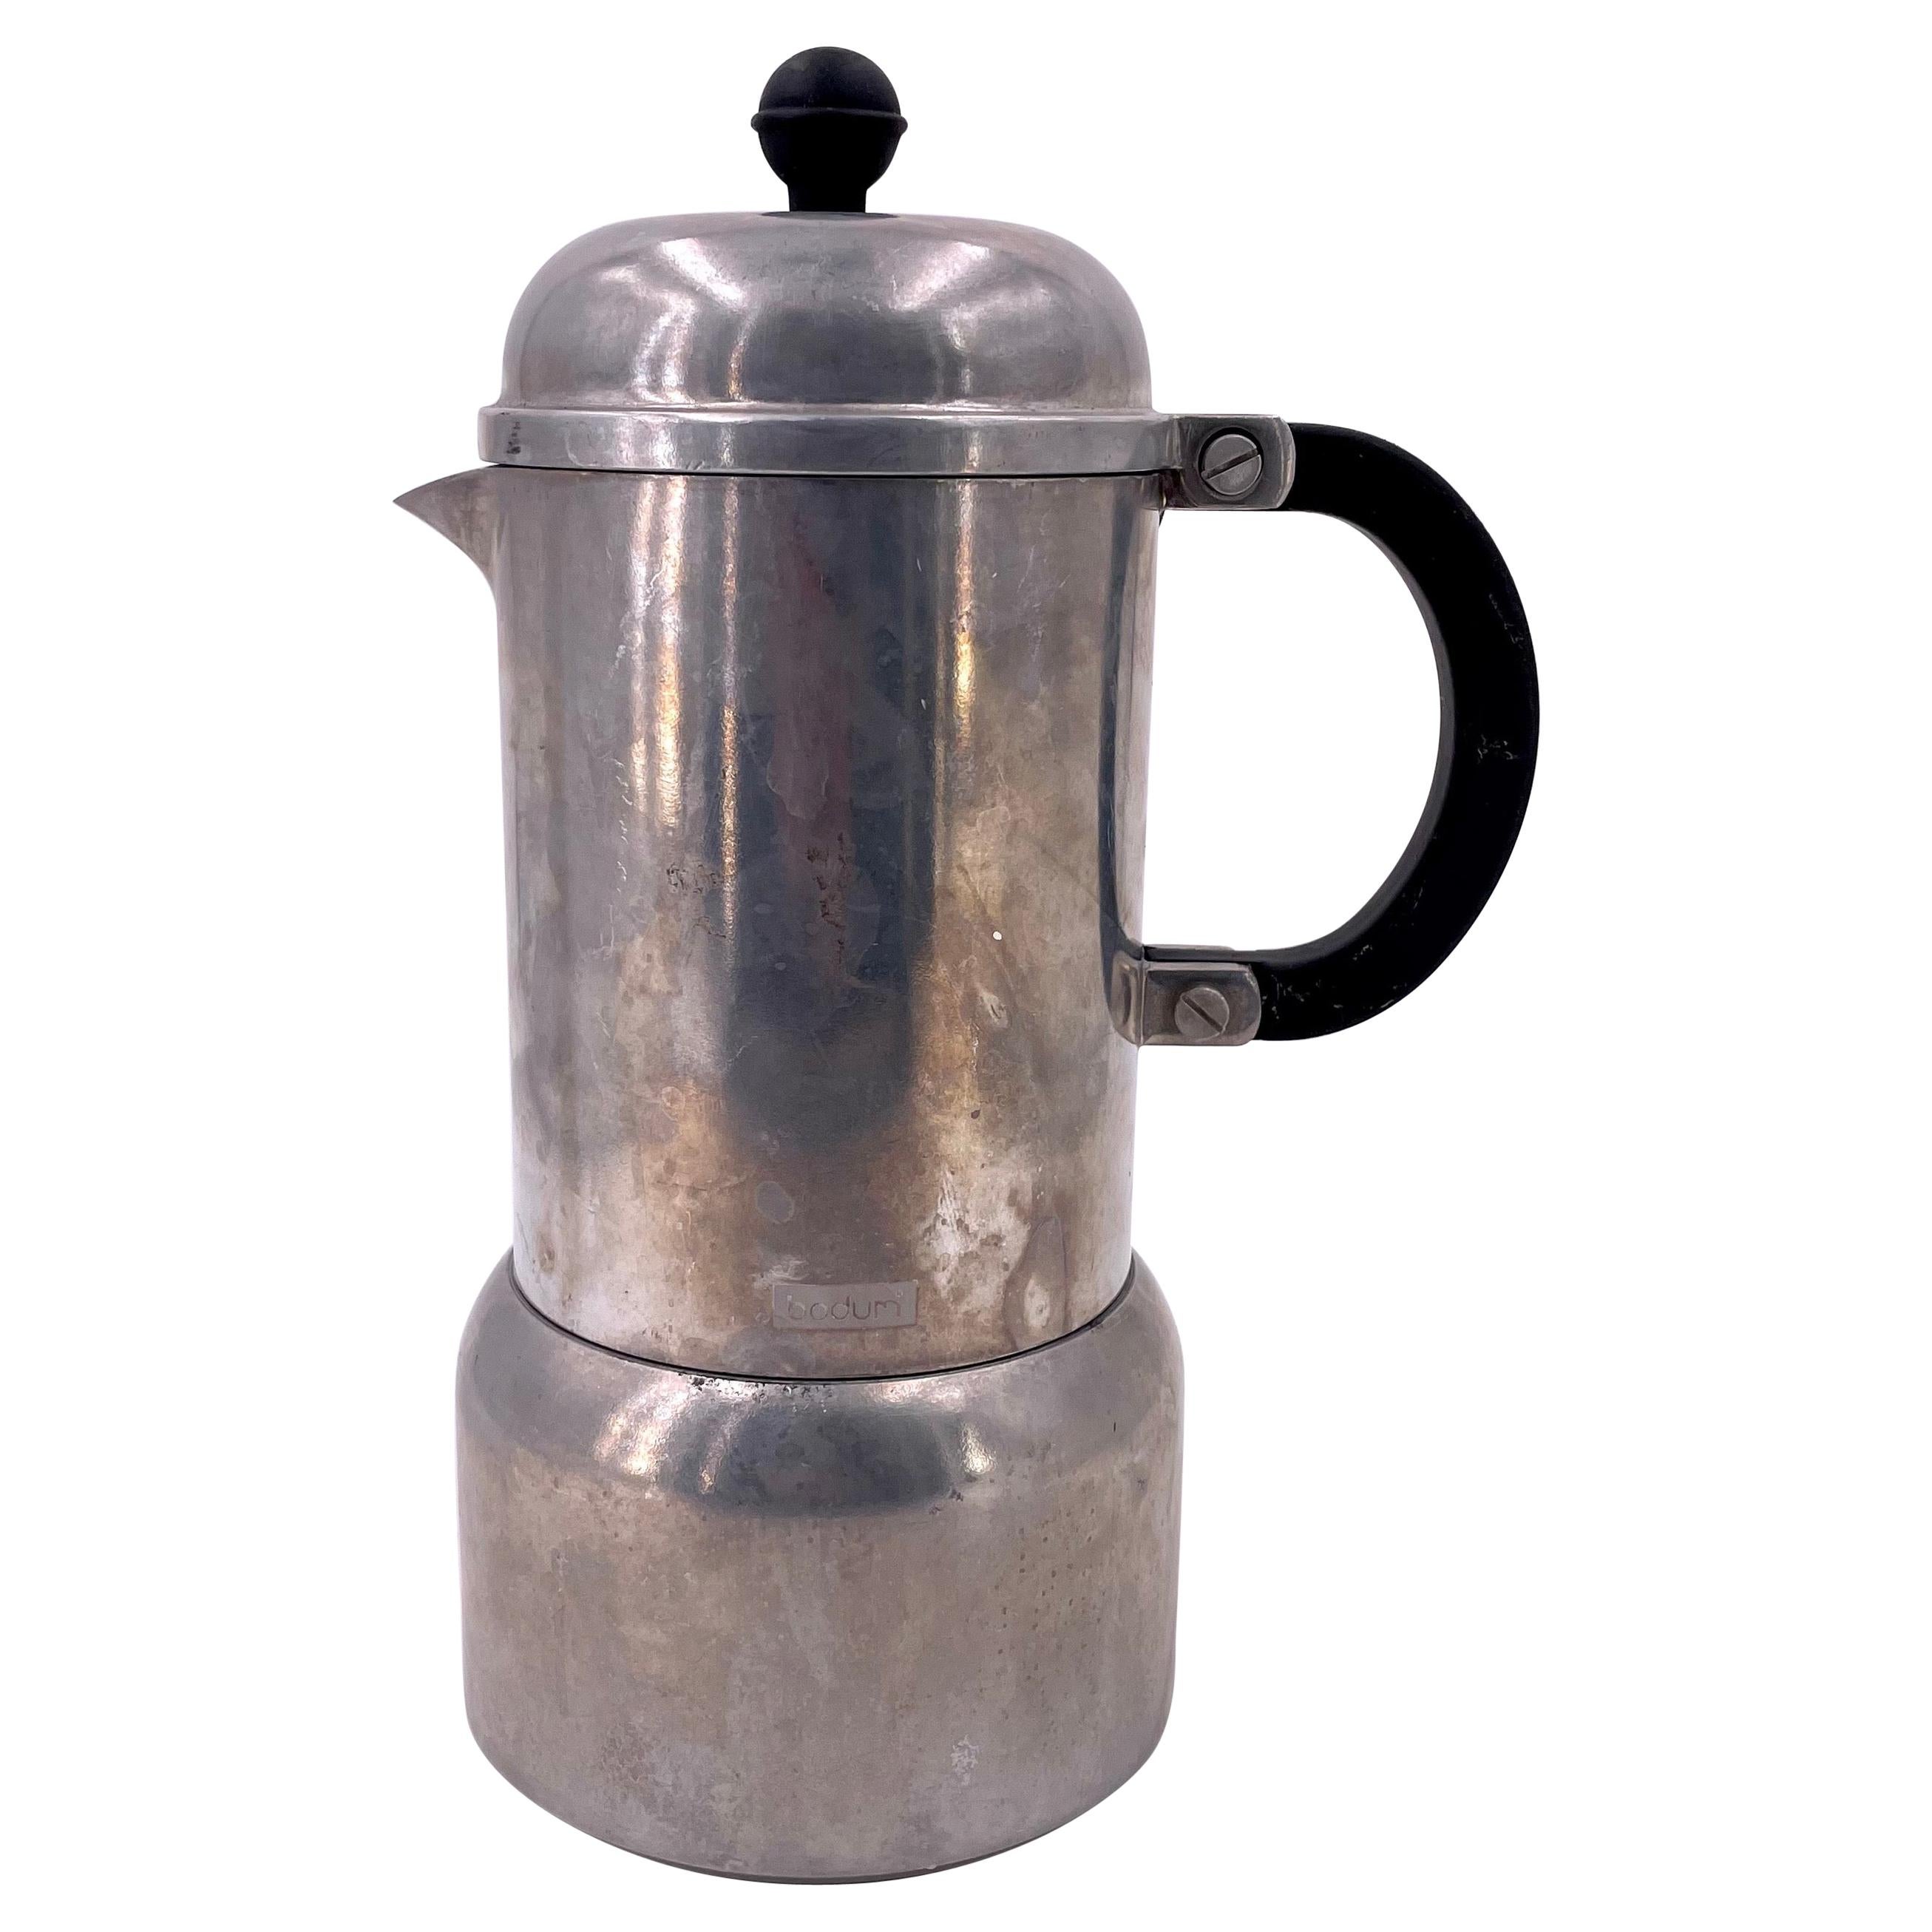 https://a.1stdibscdn.com/large-espresso-coffee-maker-postmodern-design-by-bodum-6-cup-for-sale/1121189/f_244216721625652450995/24421672_master.jpg